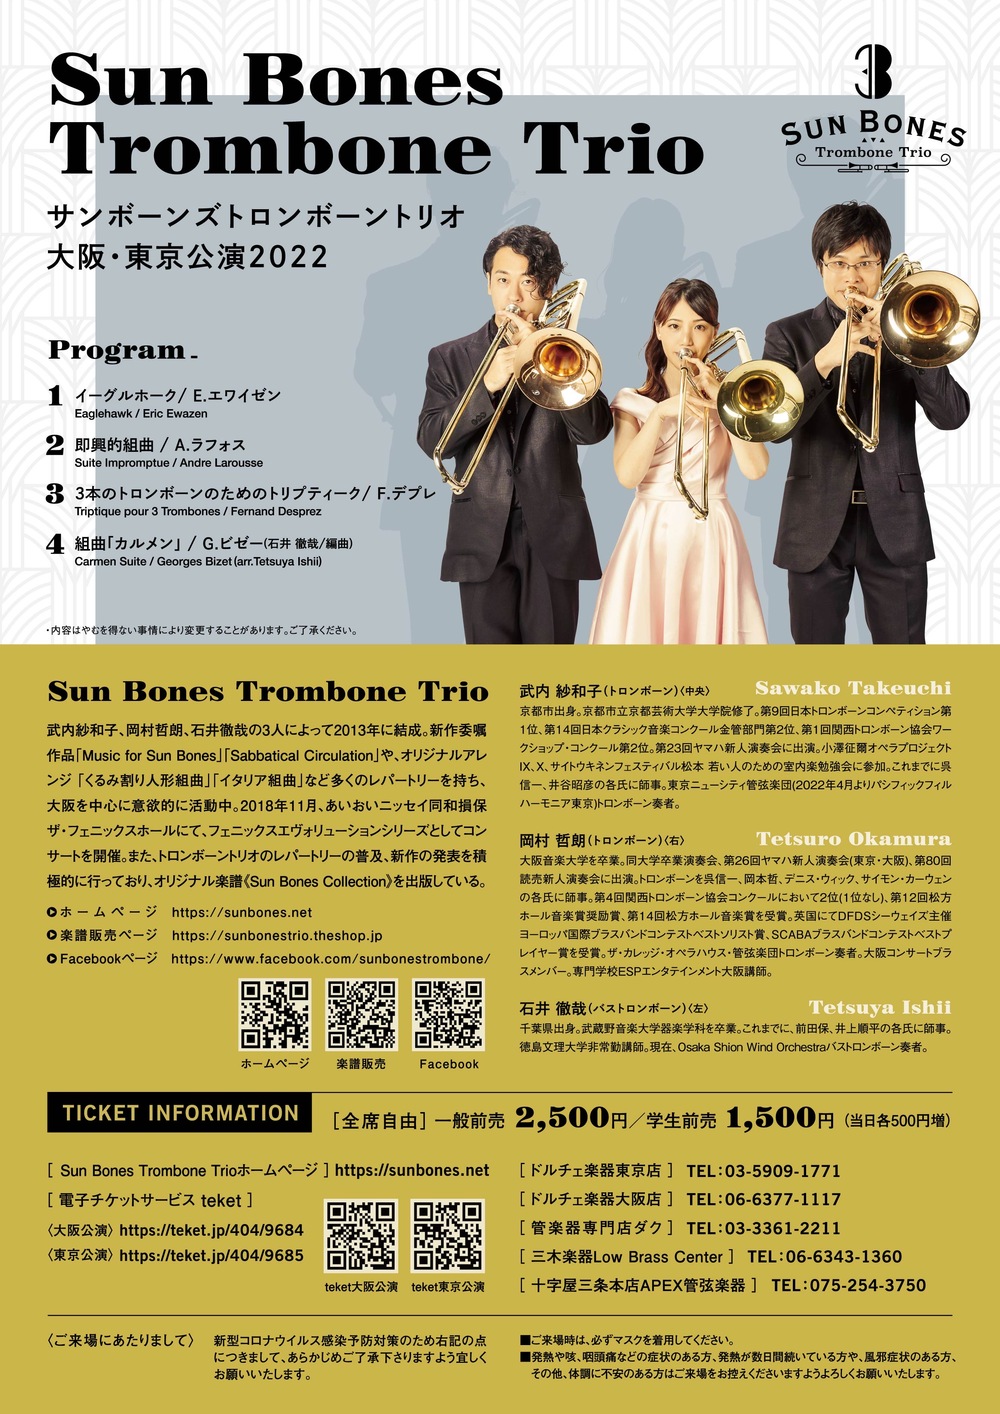 Sun Bones Trombone Trio大阪・東京公演【東京公演】【Sun Bones Trombone Trio 】 |  かつしかシンフォニーヒルズ アイリスホール